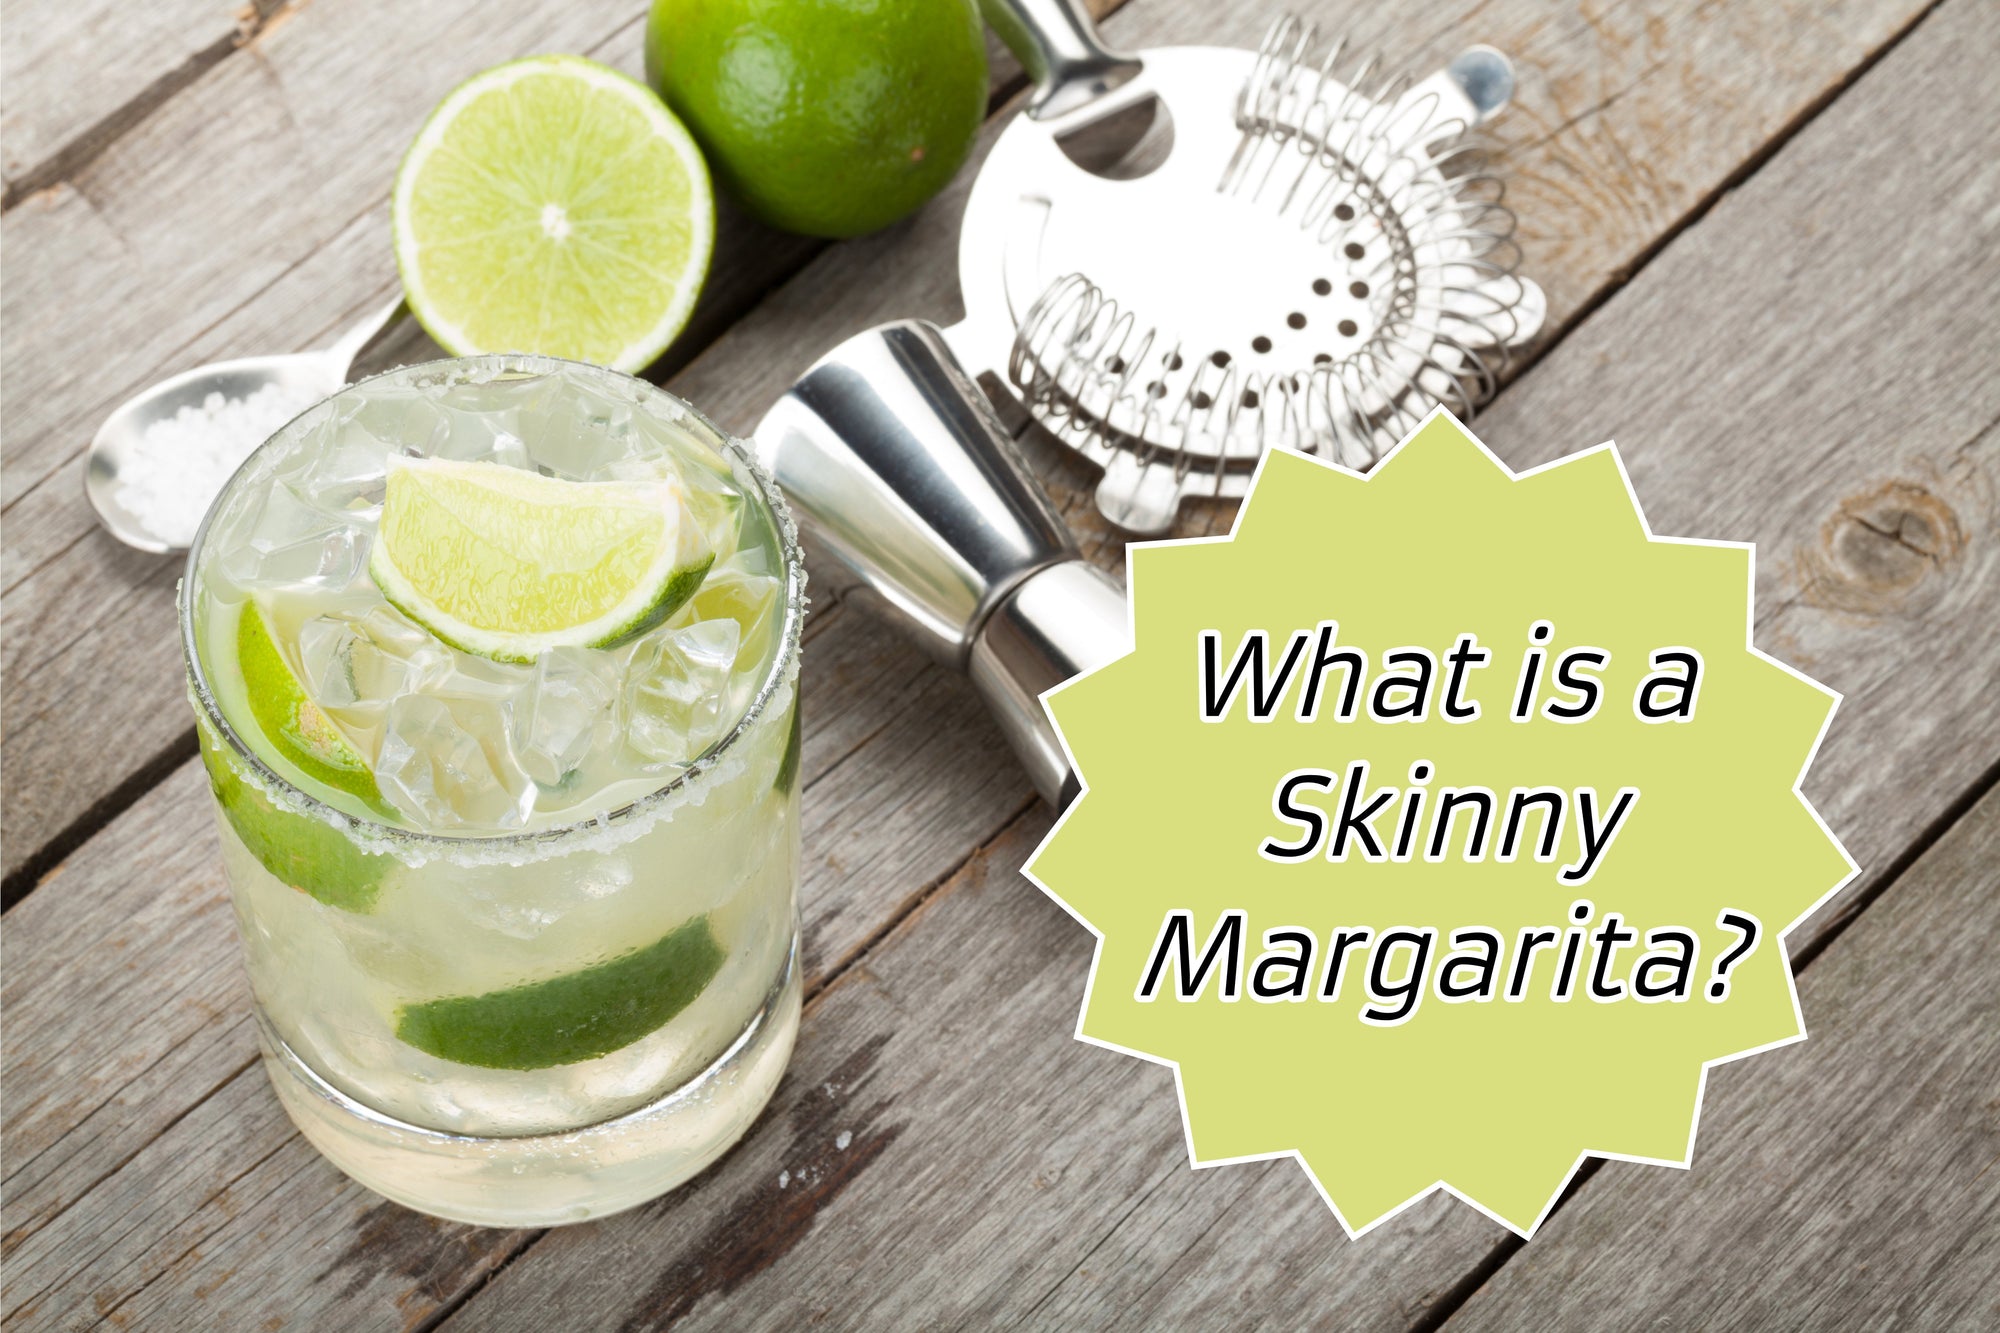 What Is a Skinny Margarita?